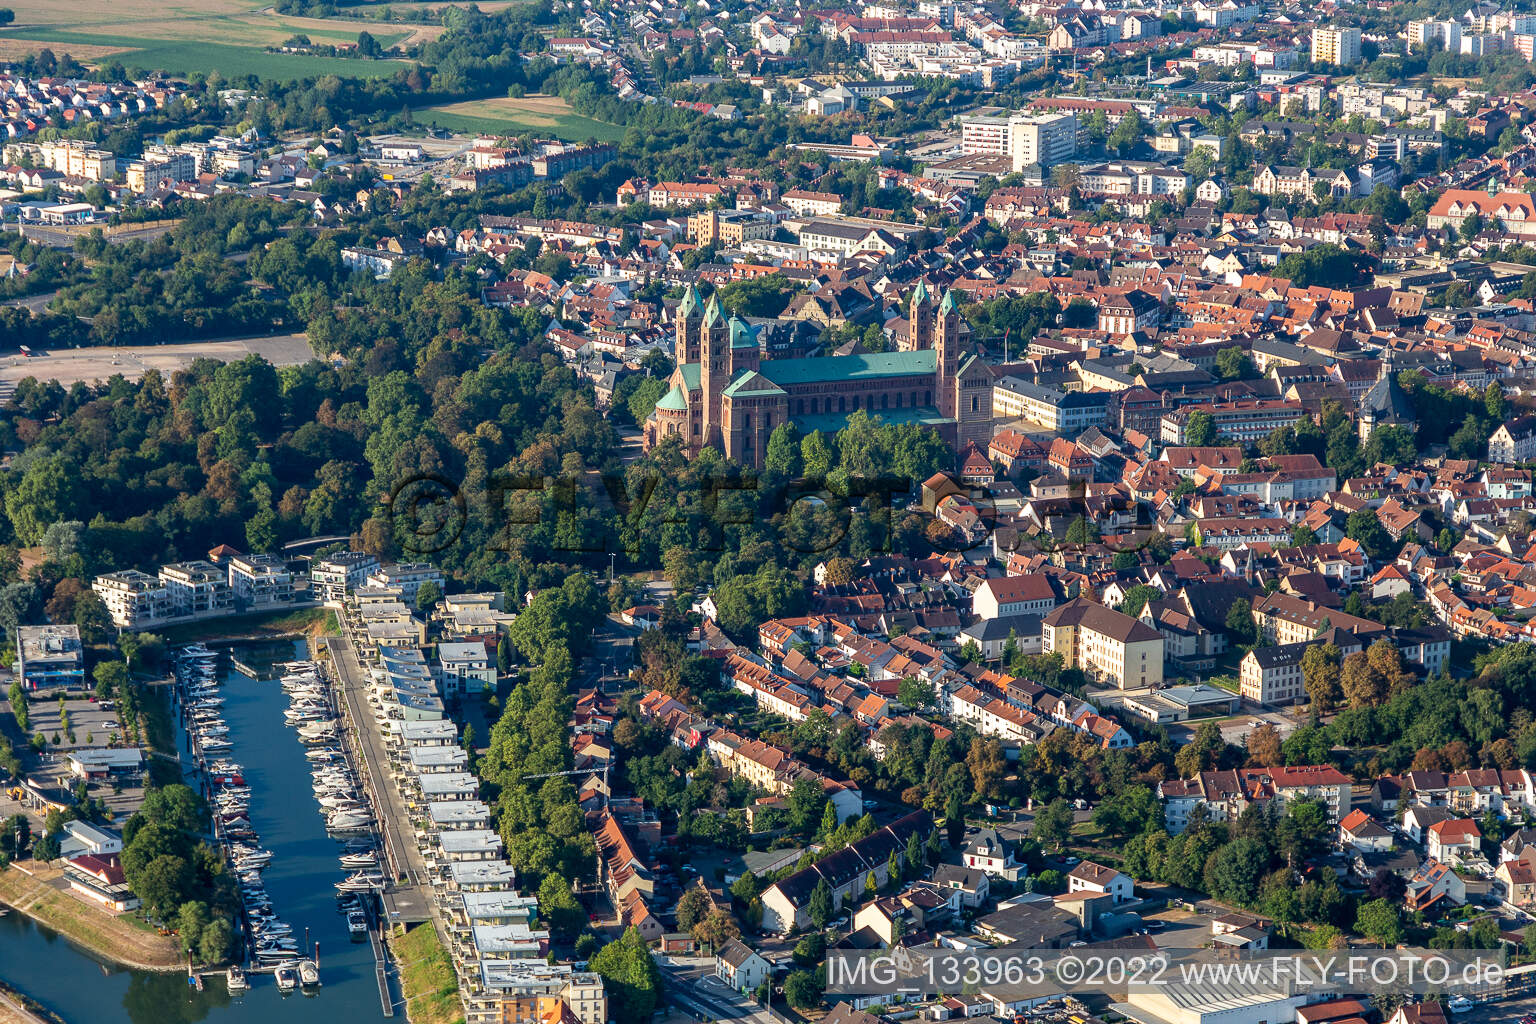 Marina Speyer in Speyer in the state Rhineland-Palatinate, Germany